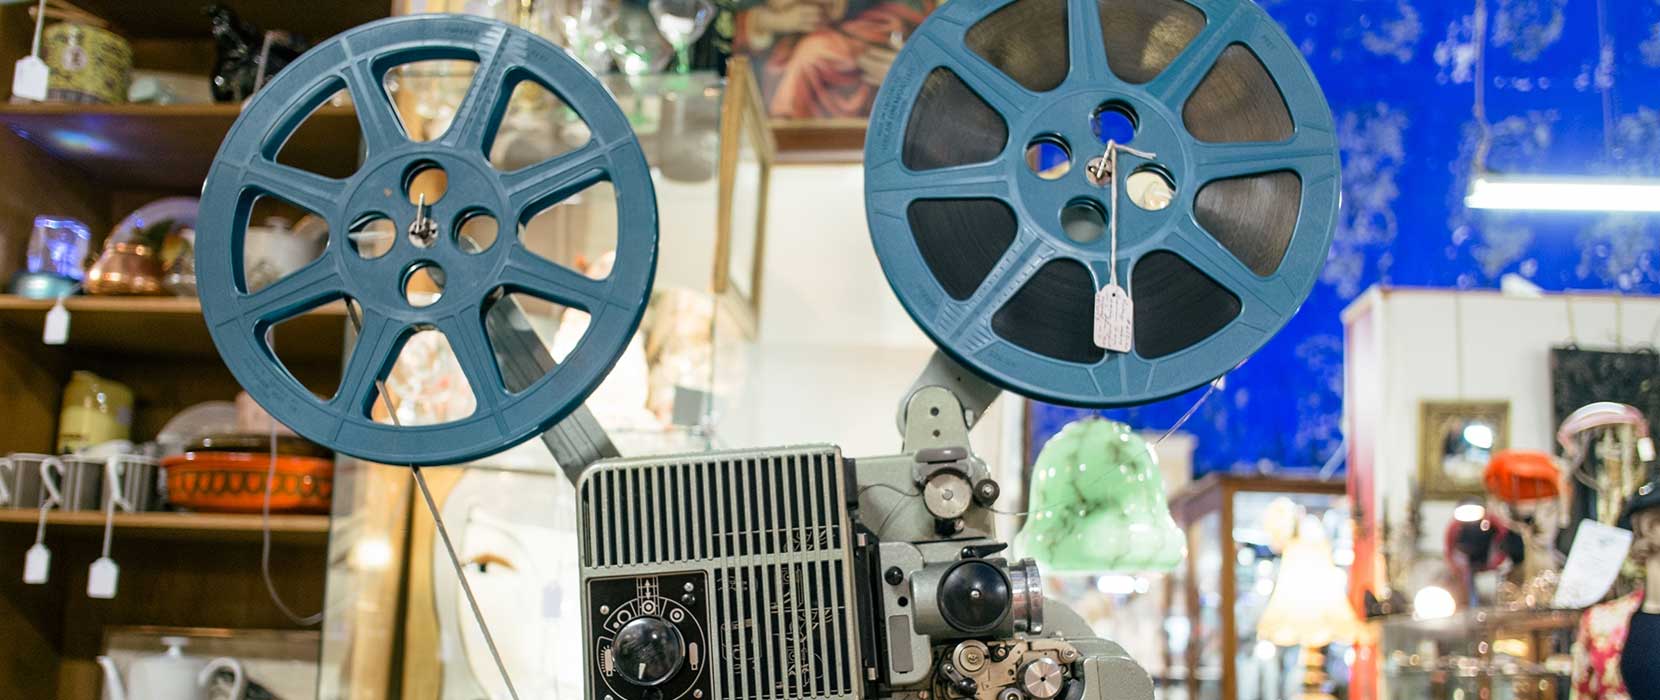 Old reel-to-reel film projector